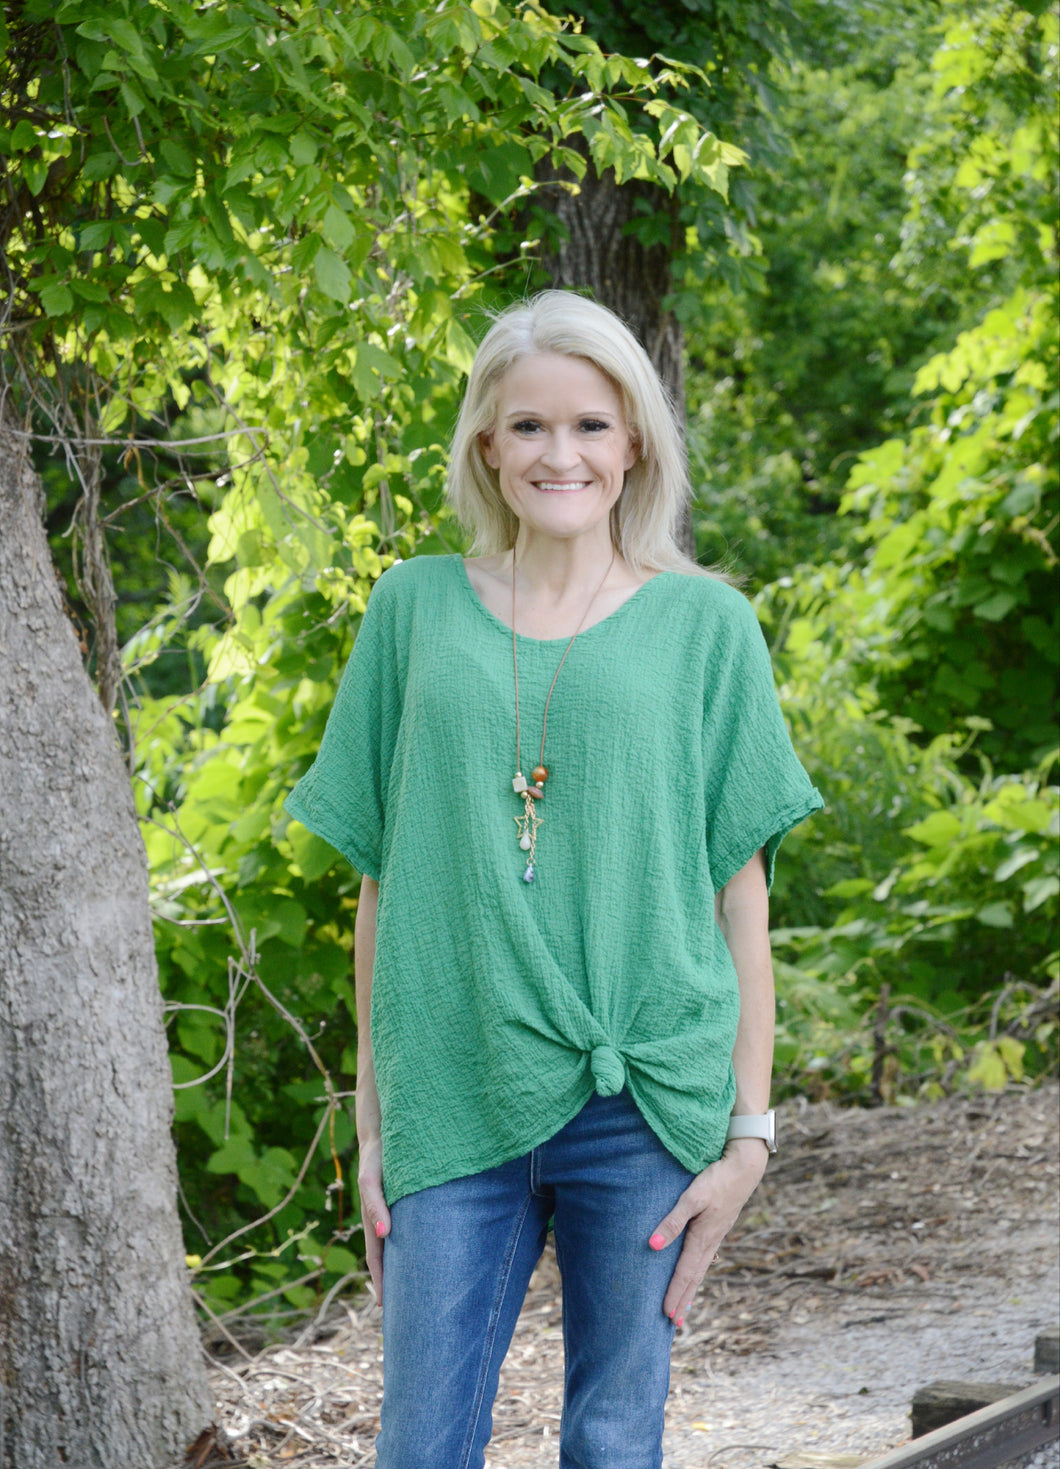 Yolly Cotton Gauze Top in Kelly Green Shirts & Tops Yolly   